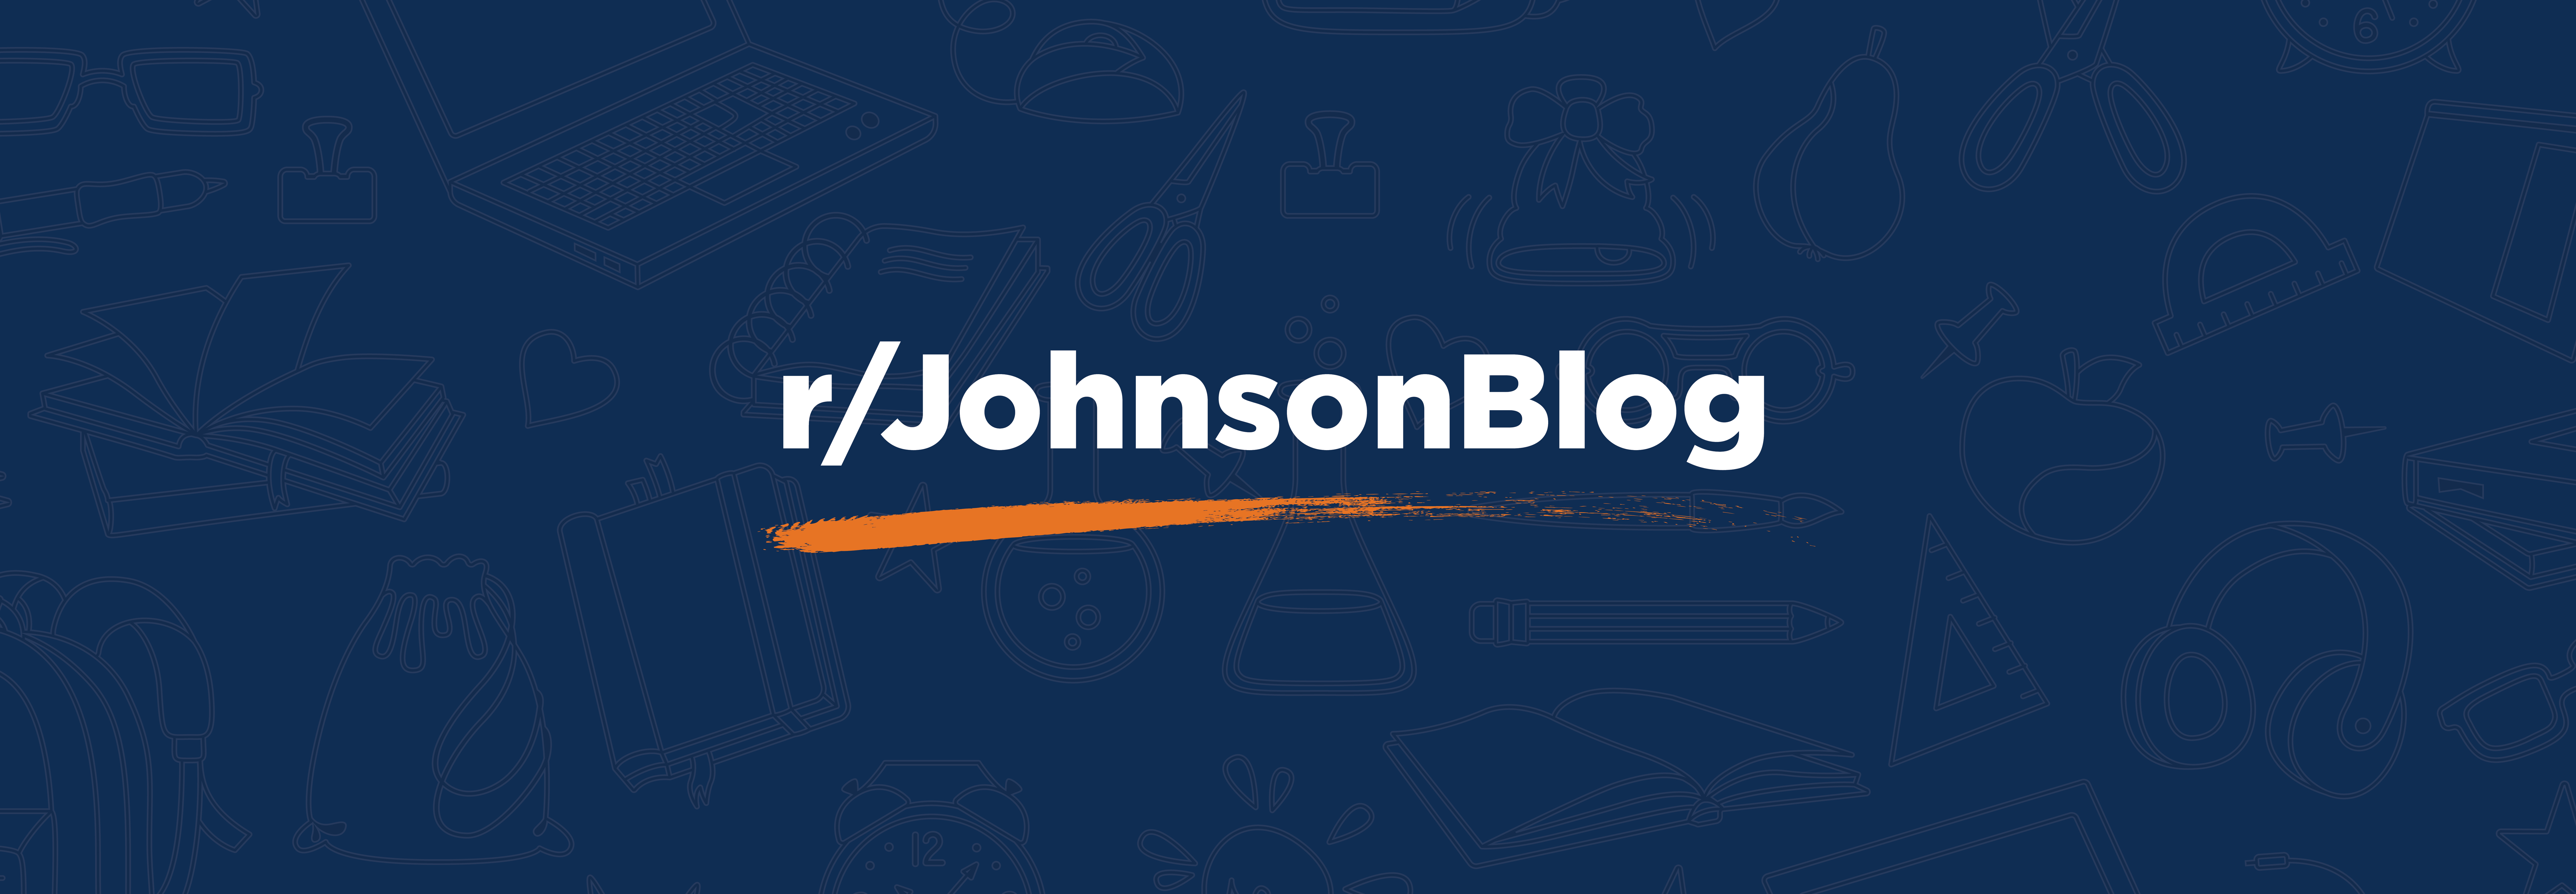 Johnson Blog header r/JohnsonBlog